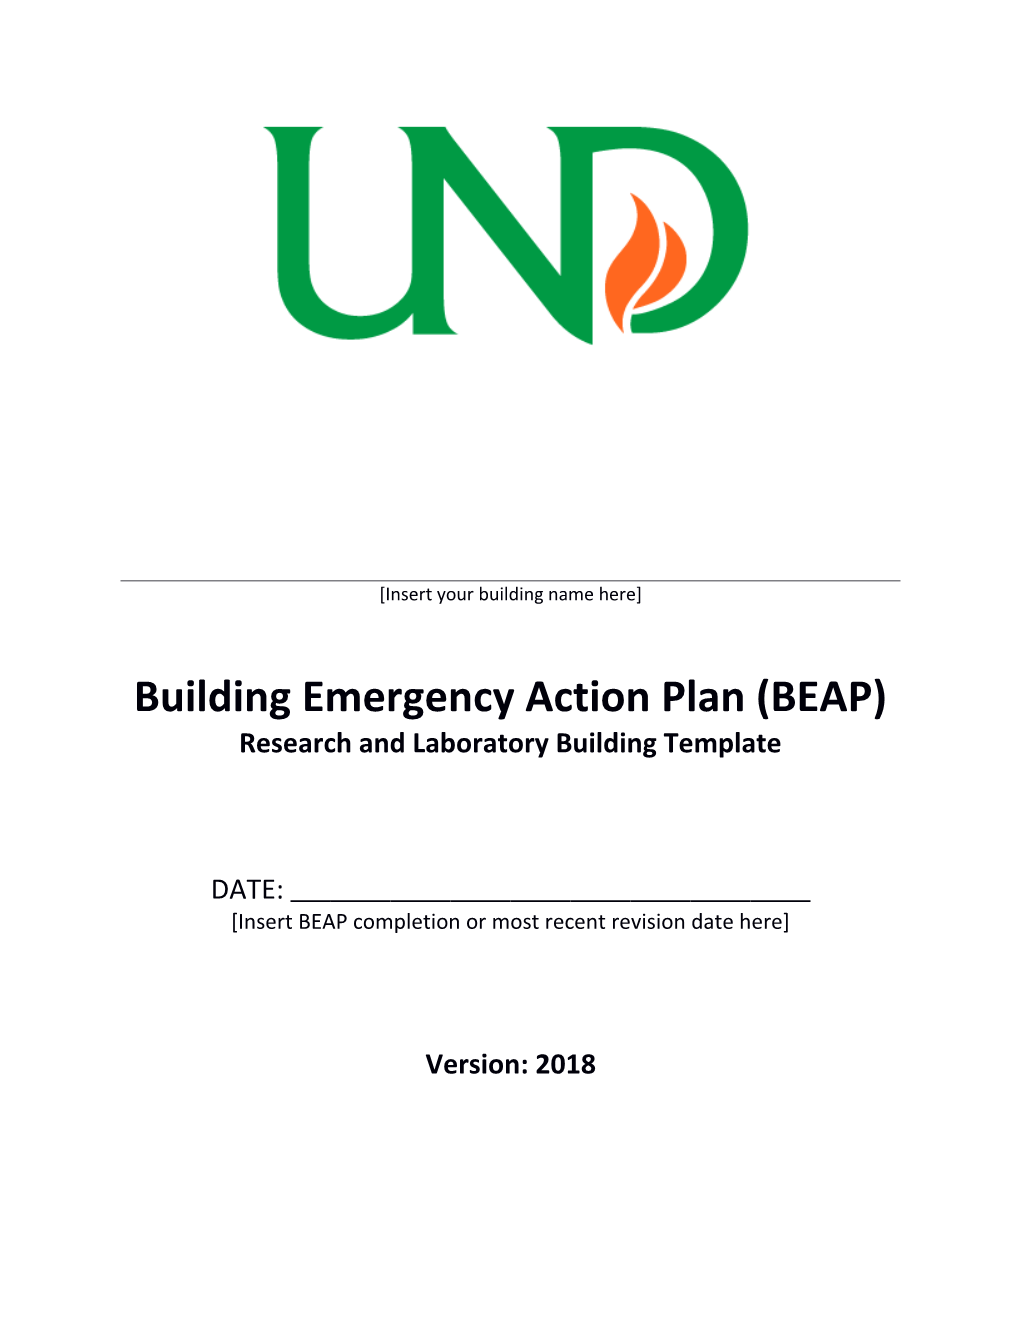 Building Emergency Action Plan (BEAP)